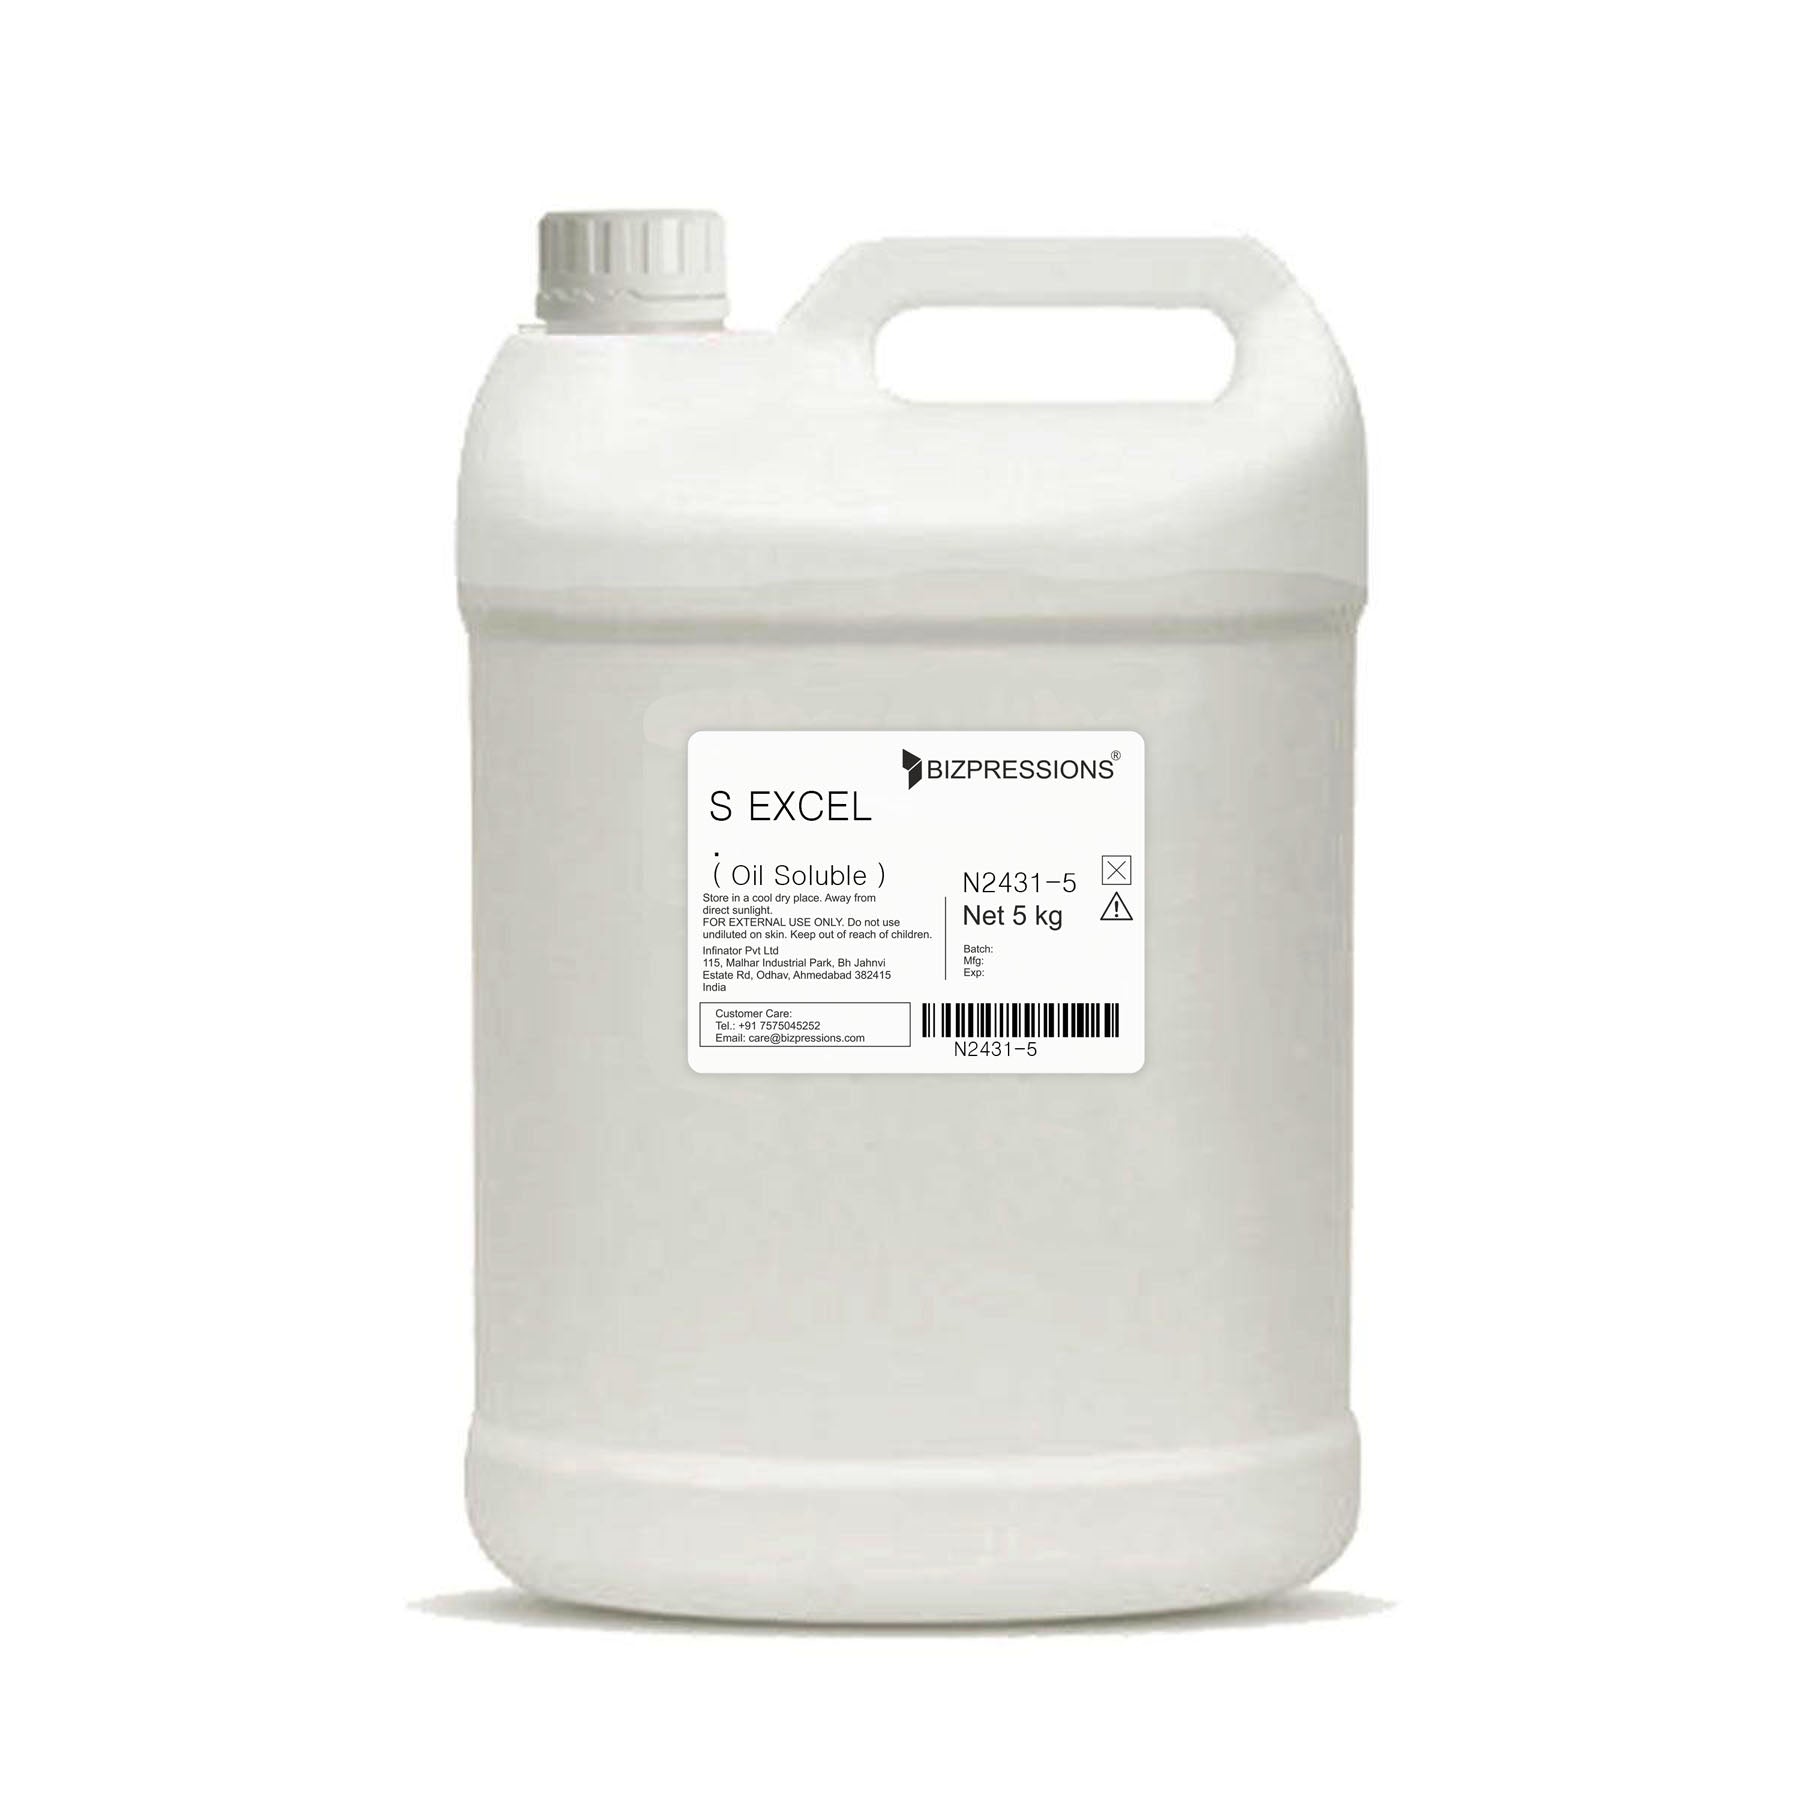 S EXCEL - Fragrance ( Oil Soluble ) - 5 kg